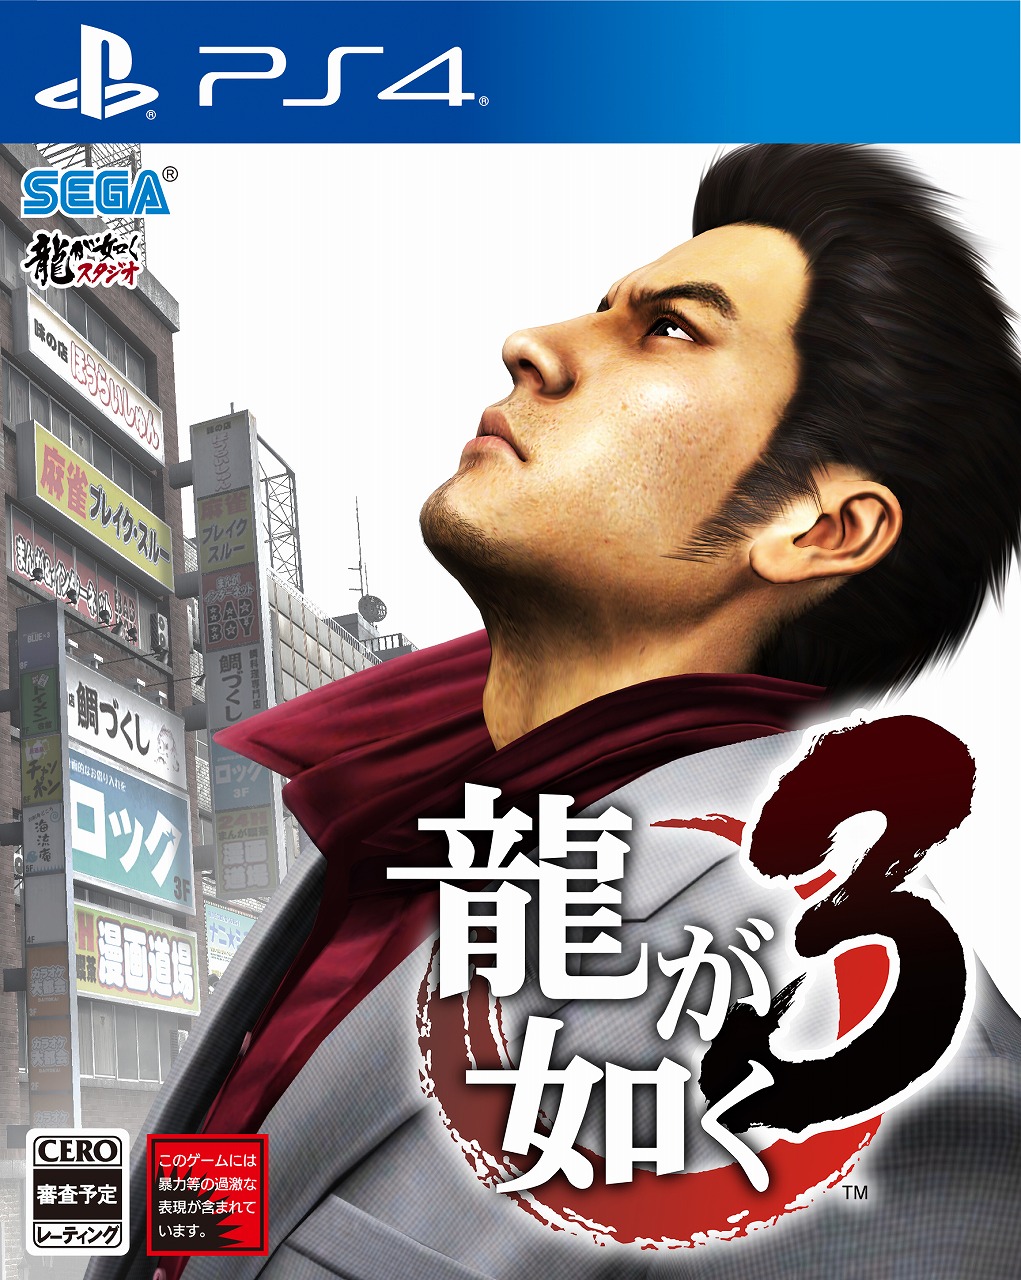 Yakuza 3 Remaster JP Cover